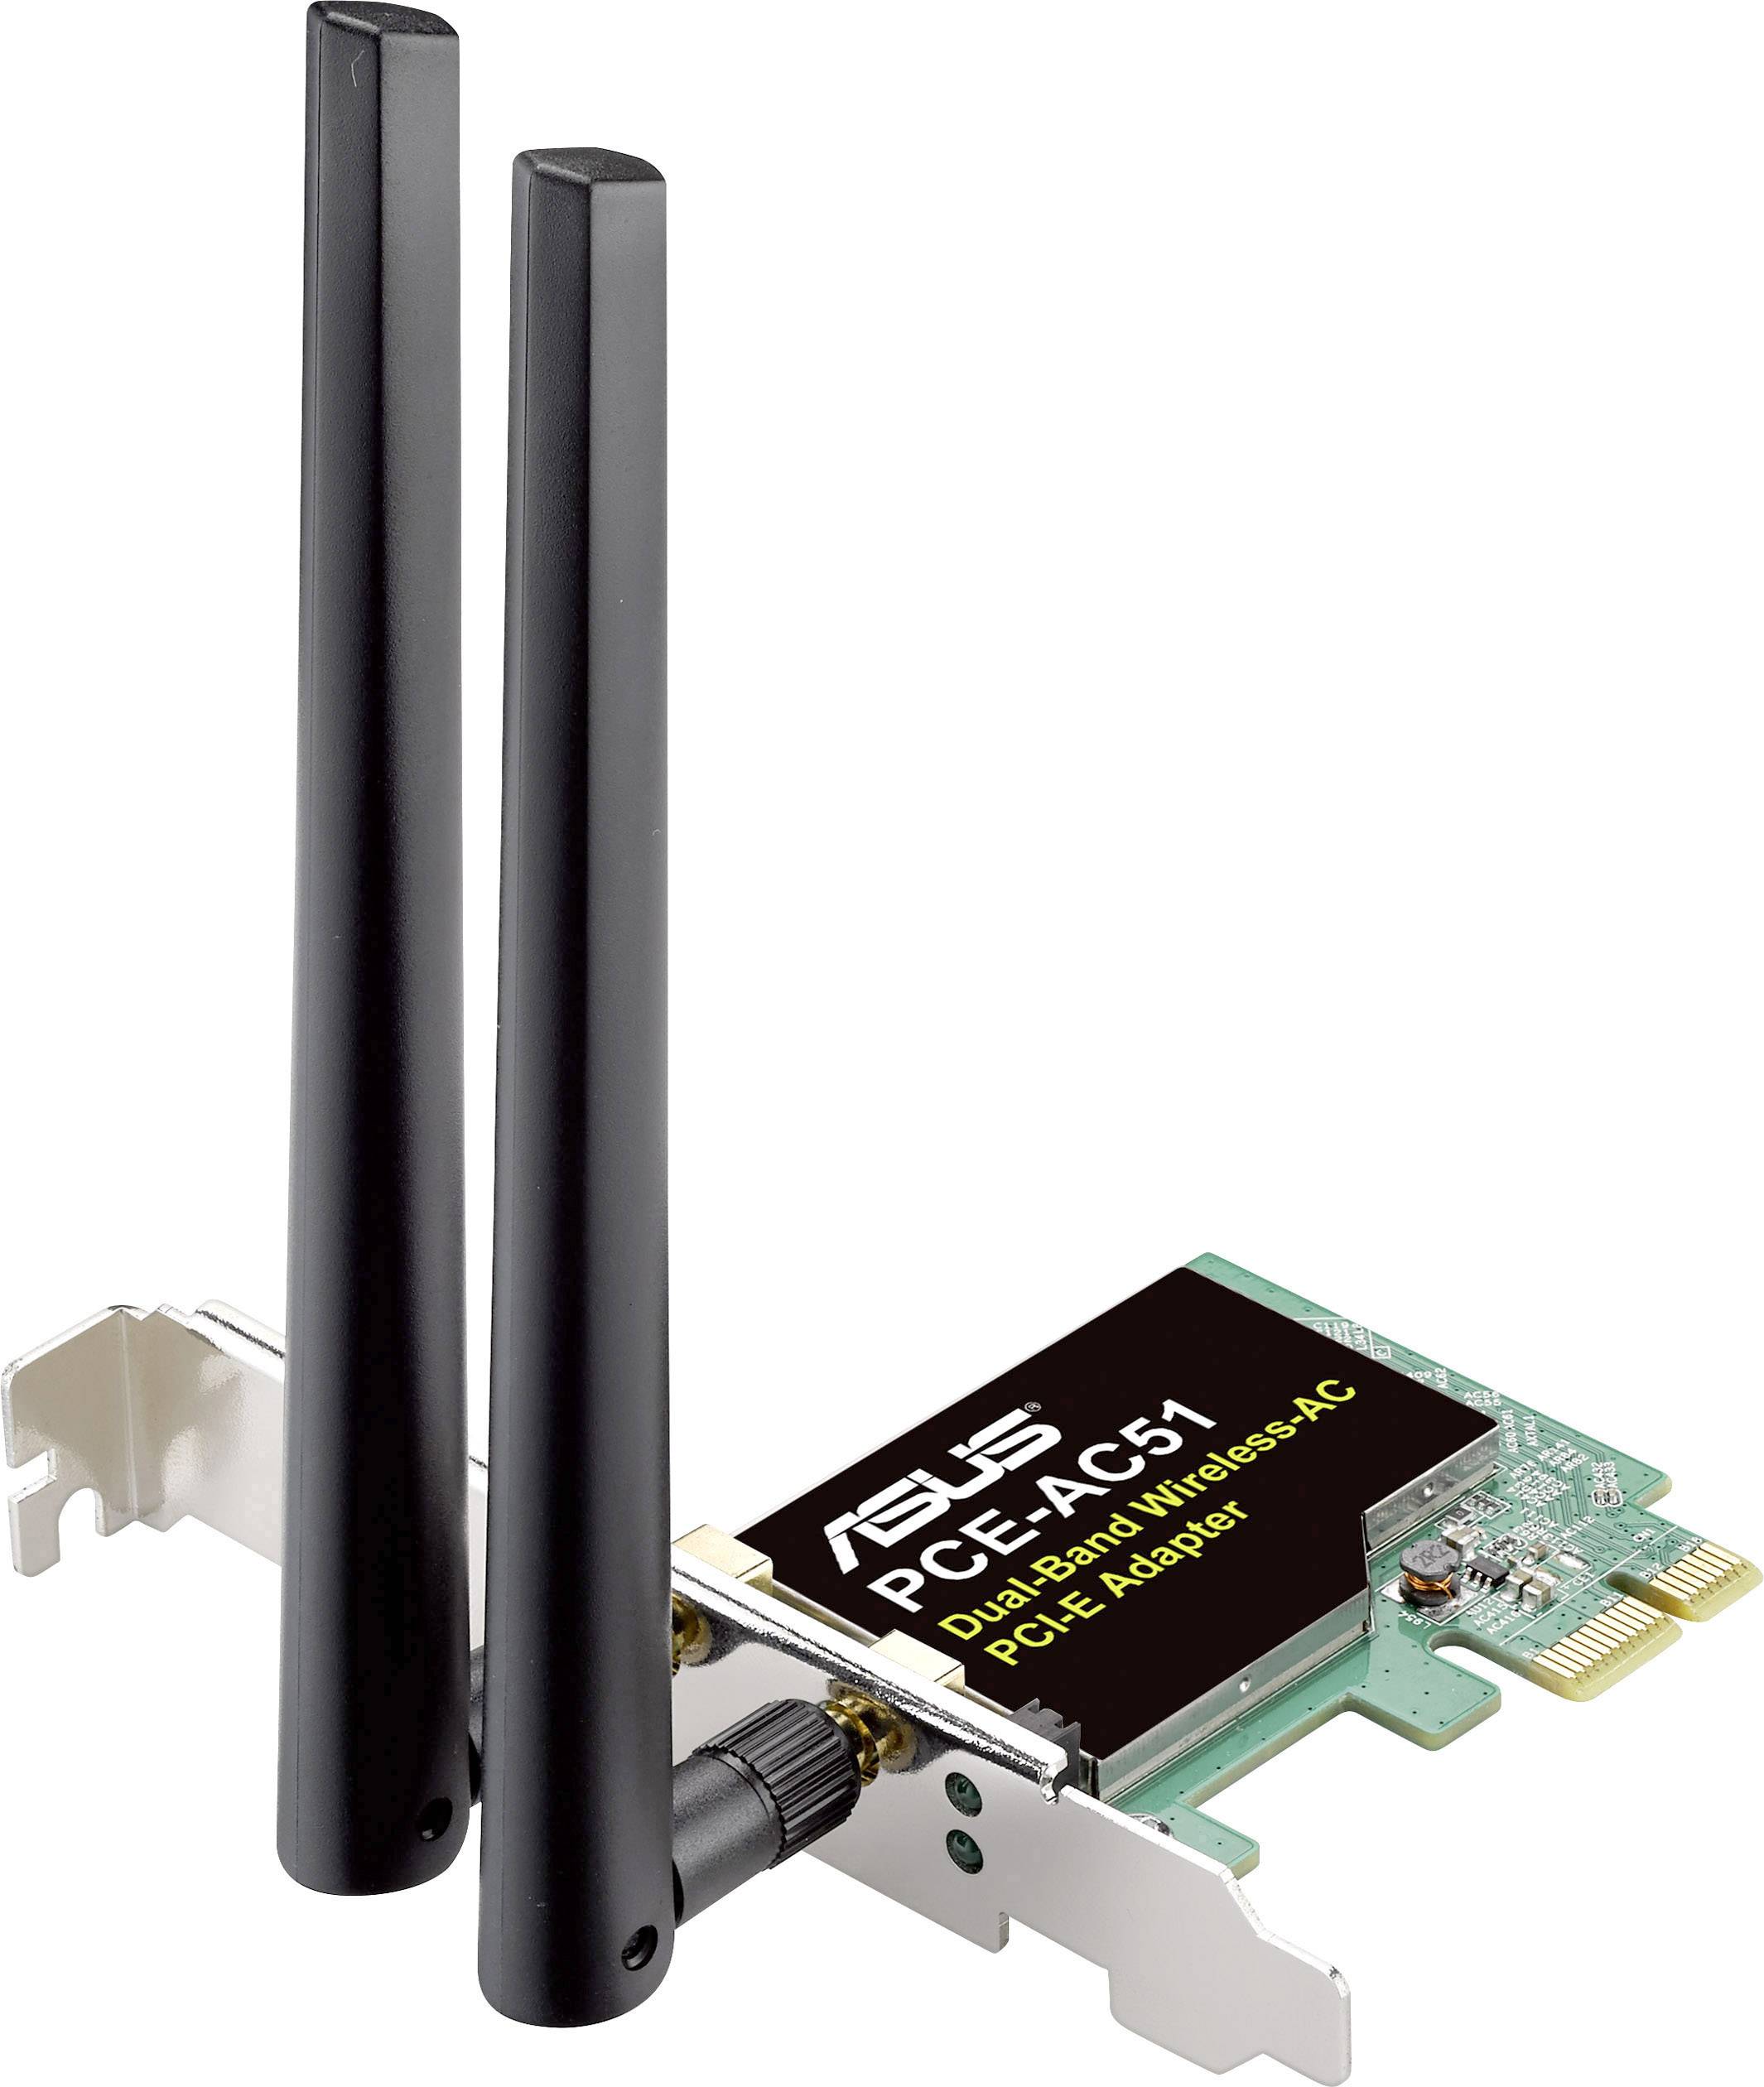 Carte WiFi PCIExpress, WiFi Asus PCEAC51 750 Mo/s Conrad.fr